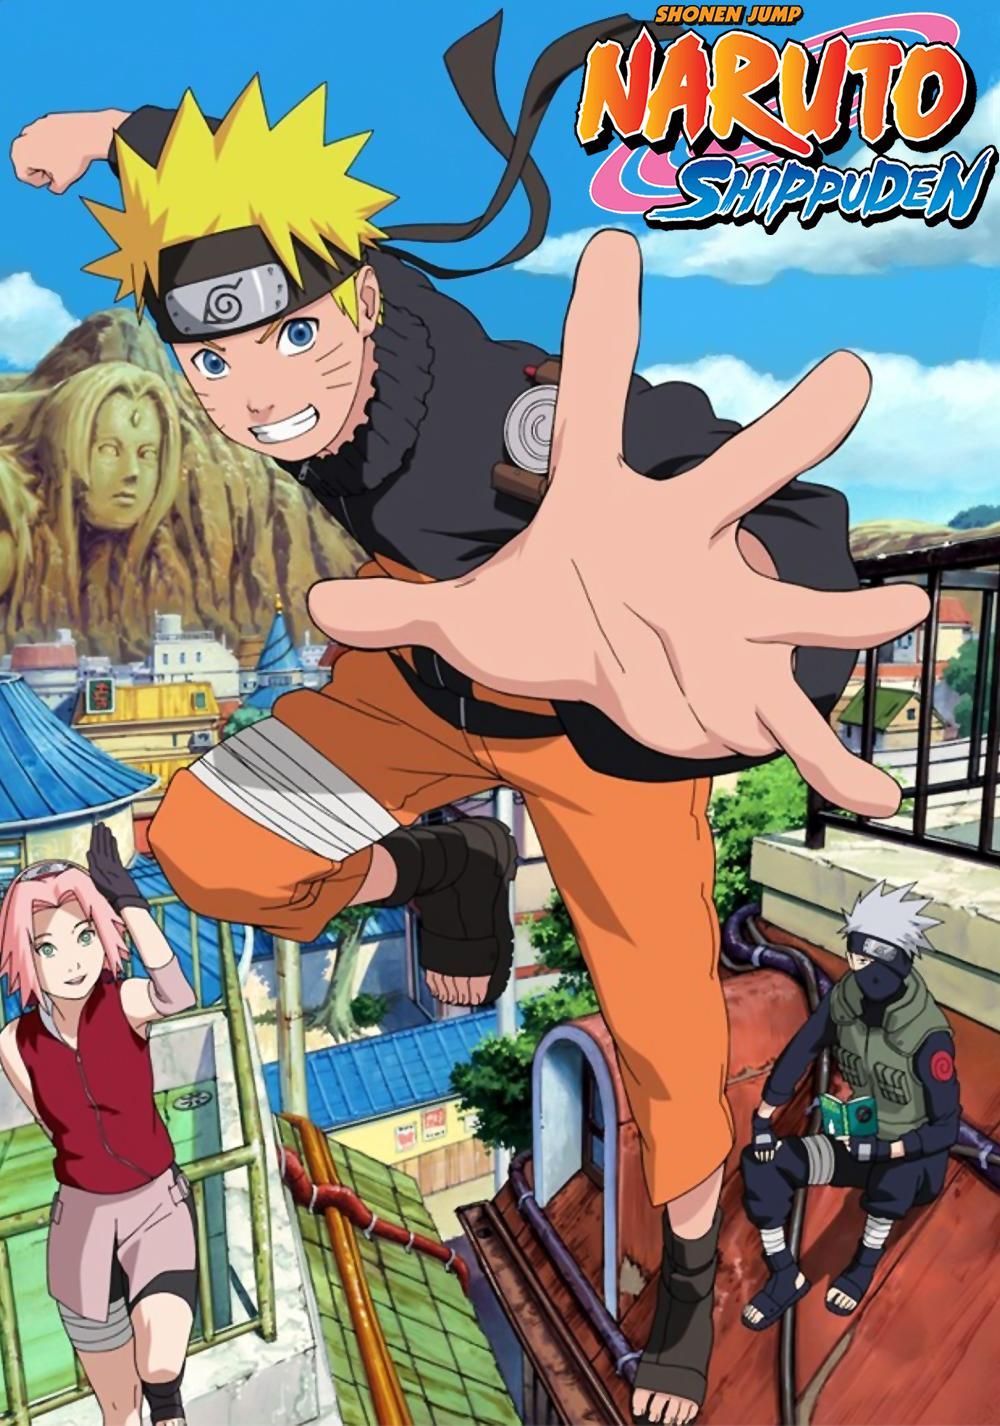 Naruto #uzumaki #anime #panda #netflix #movie. Best anime shows